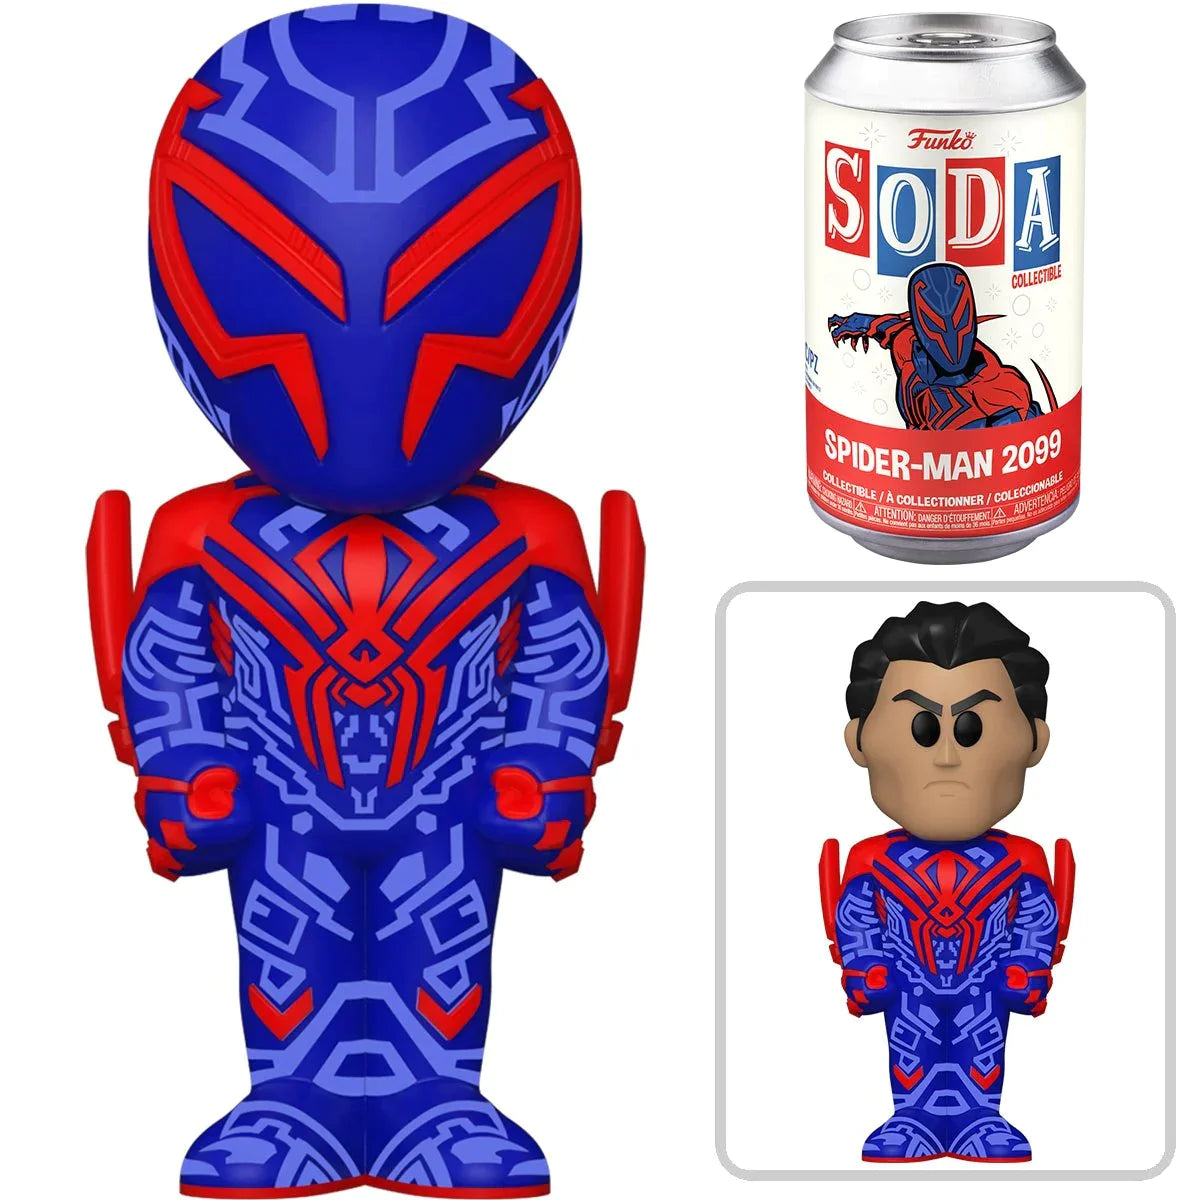 Funko Soda! Marvel Spider-Man: Across the Spider-Verse Spider-Man 2099 Vinyl Figure